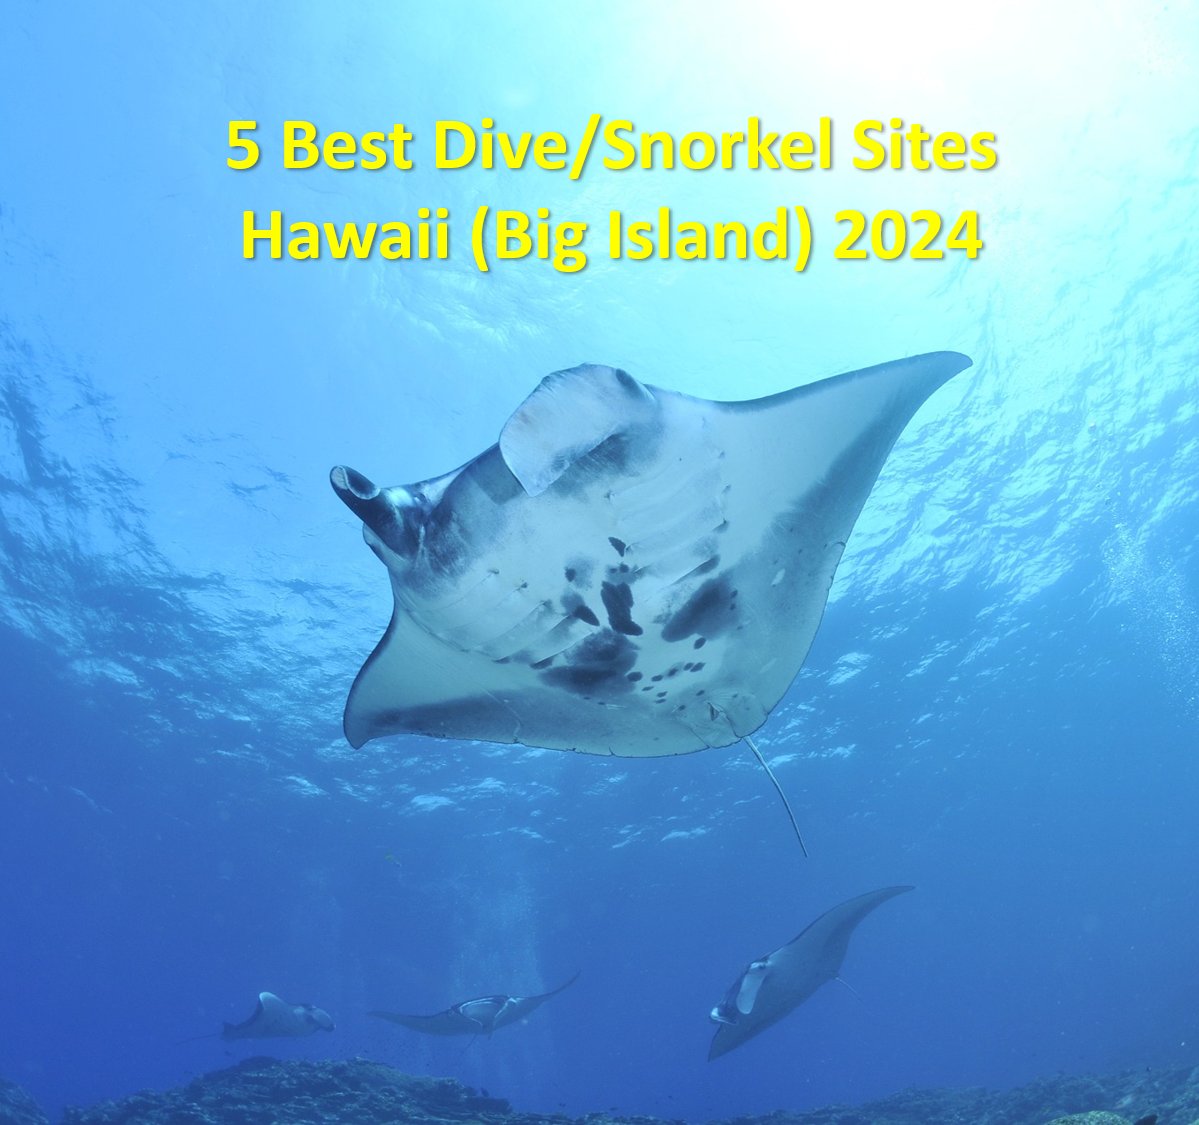 🤿5 Best Dive/Snorkel Sites in Hawaii (Big Island) in 2024
 
 1. Kahalu'u Beach
 2. Mile 4 Marker
 3. Manta Ray Night Dive
 4. Place of Refuge (Two Step)
 5. Kailua Pier

View List: thescubadirectory.com/dive-guides/Un…
 
#Hawaii #BigIsland #Snorkel #GOHAWAII  #ScubaDivingMag #PADI #paditv